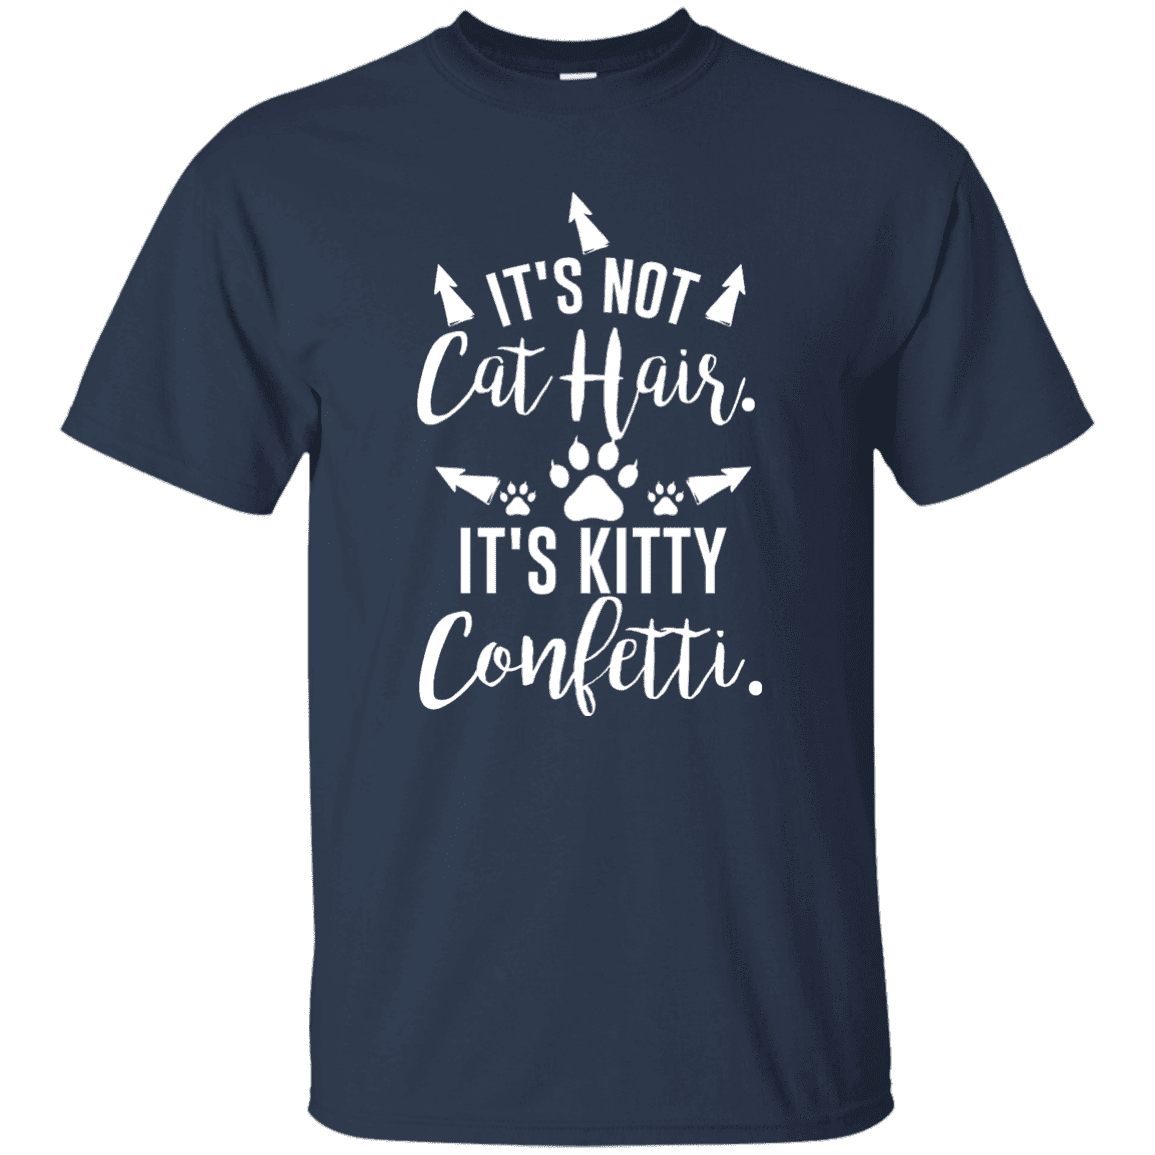 Kitty Confetti - T Shirt.